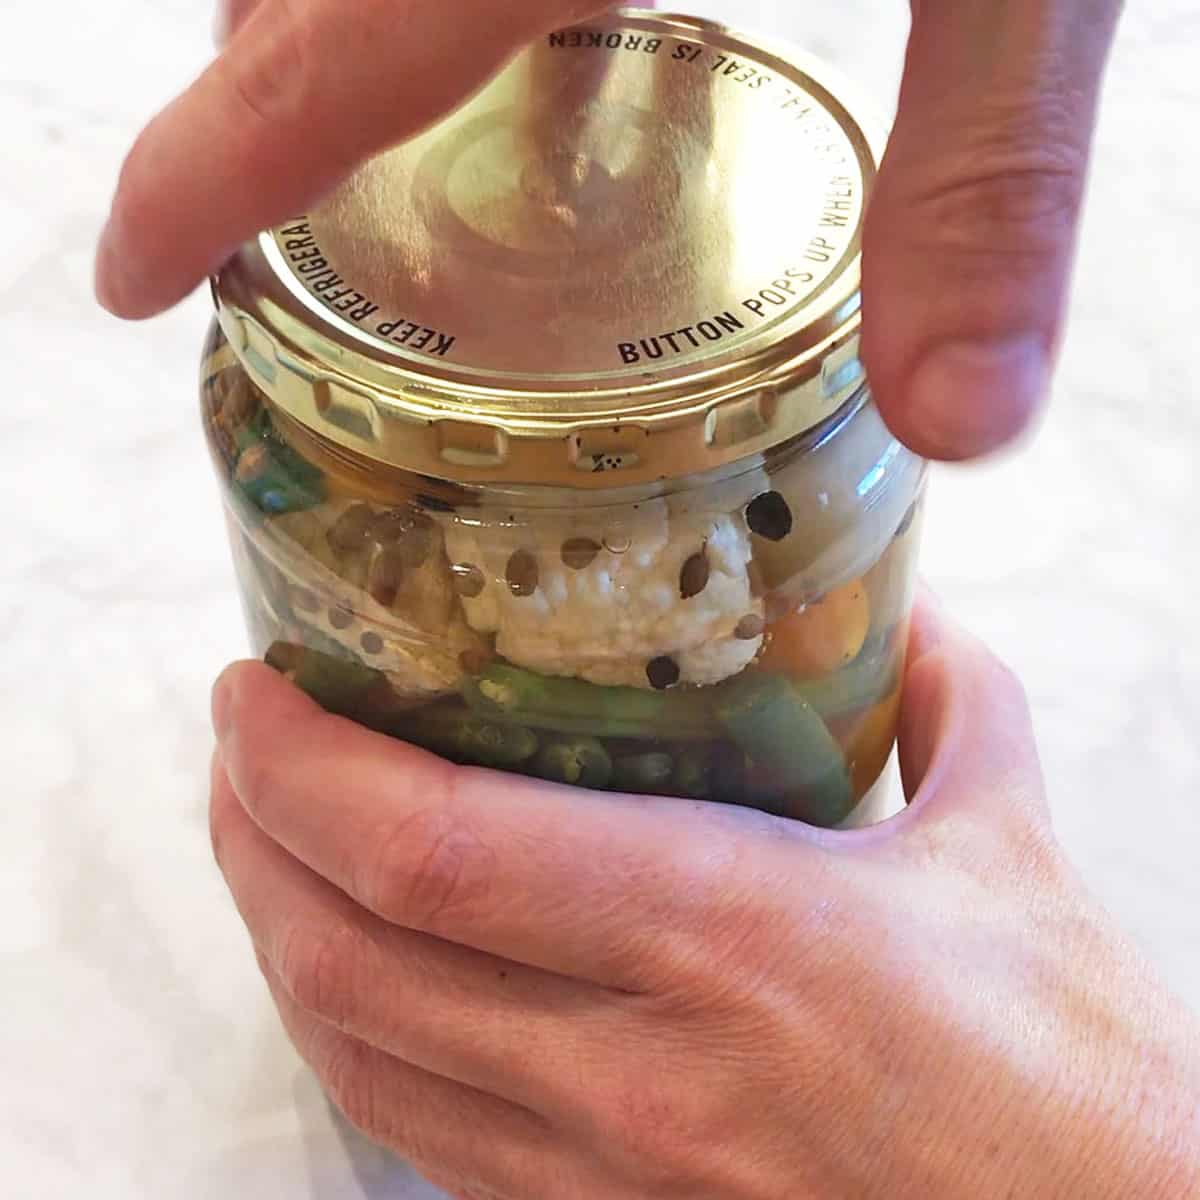 Closing the jar's lid. 